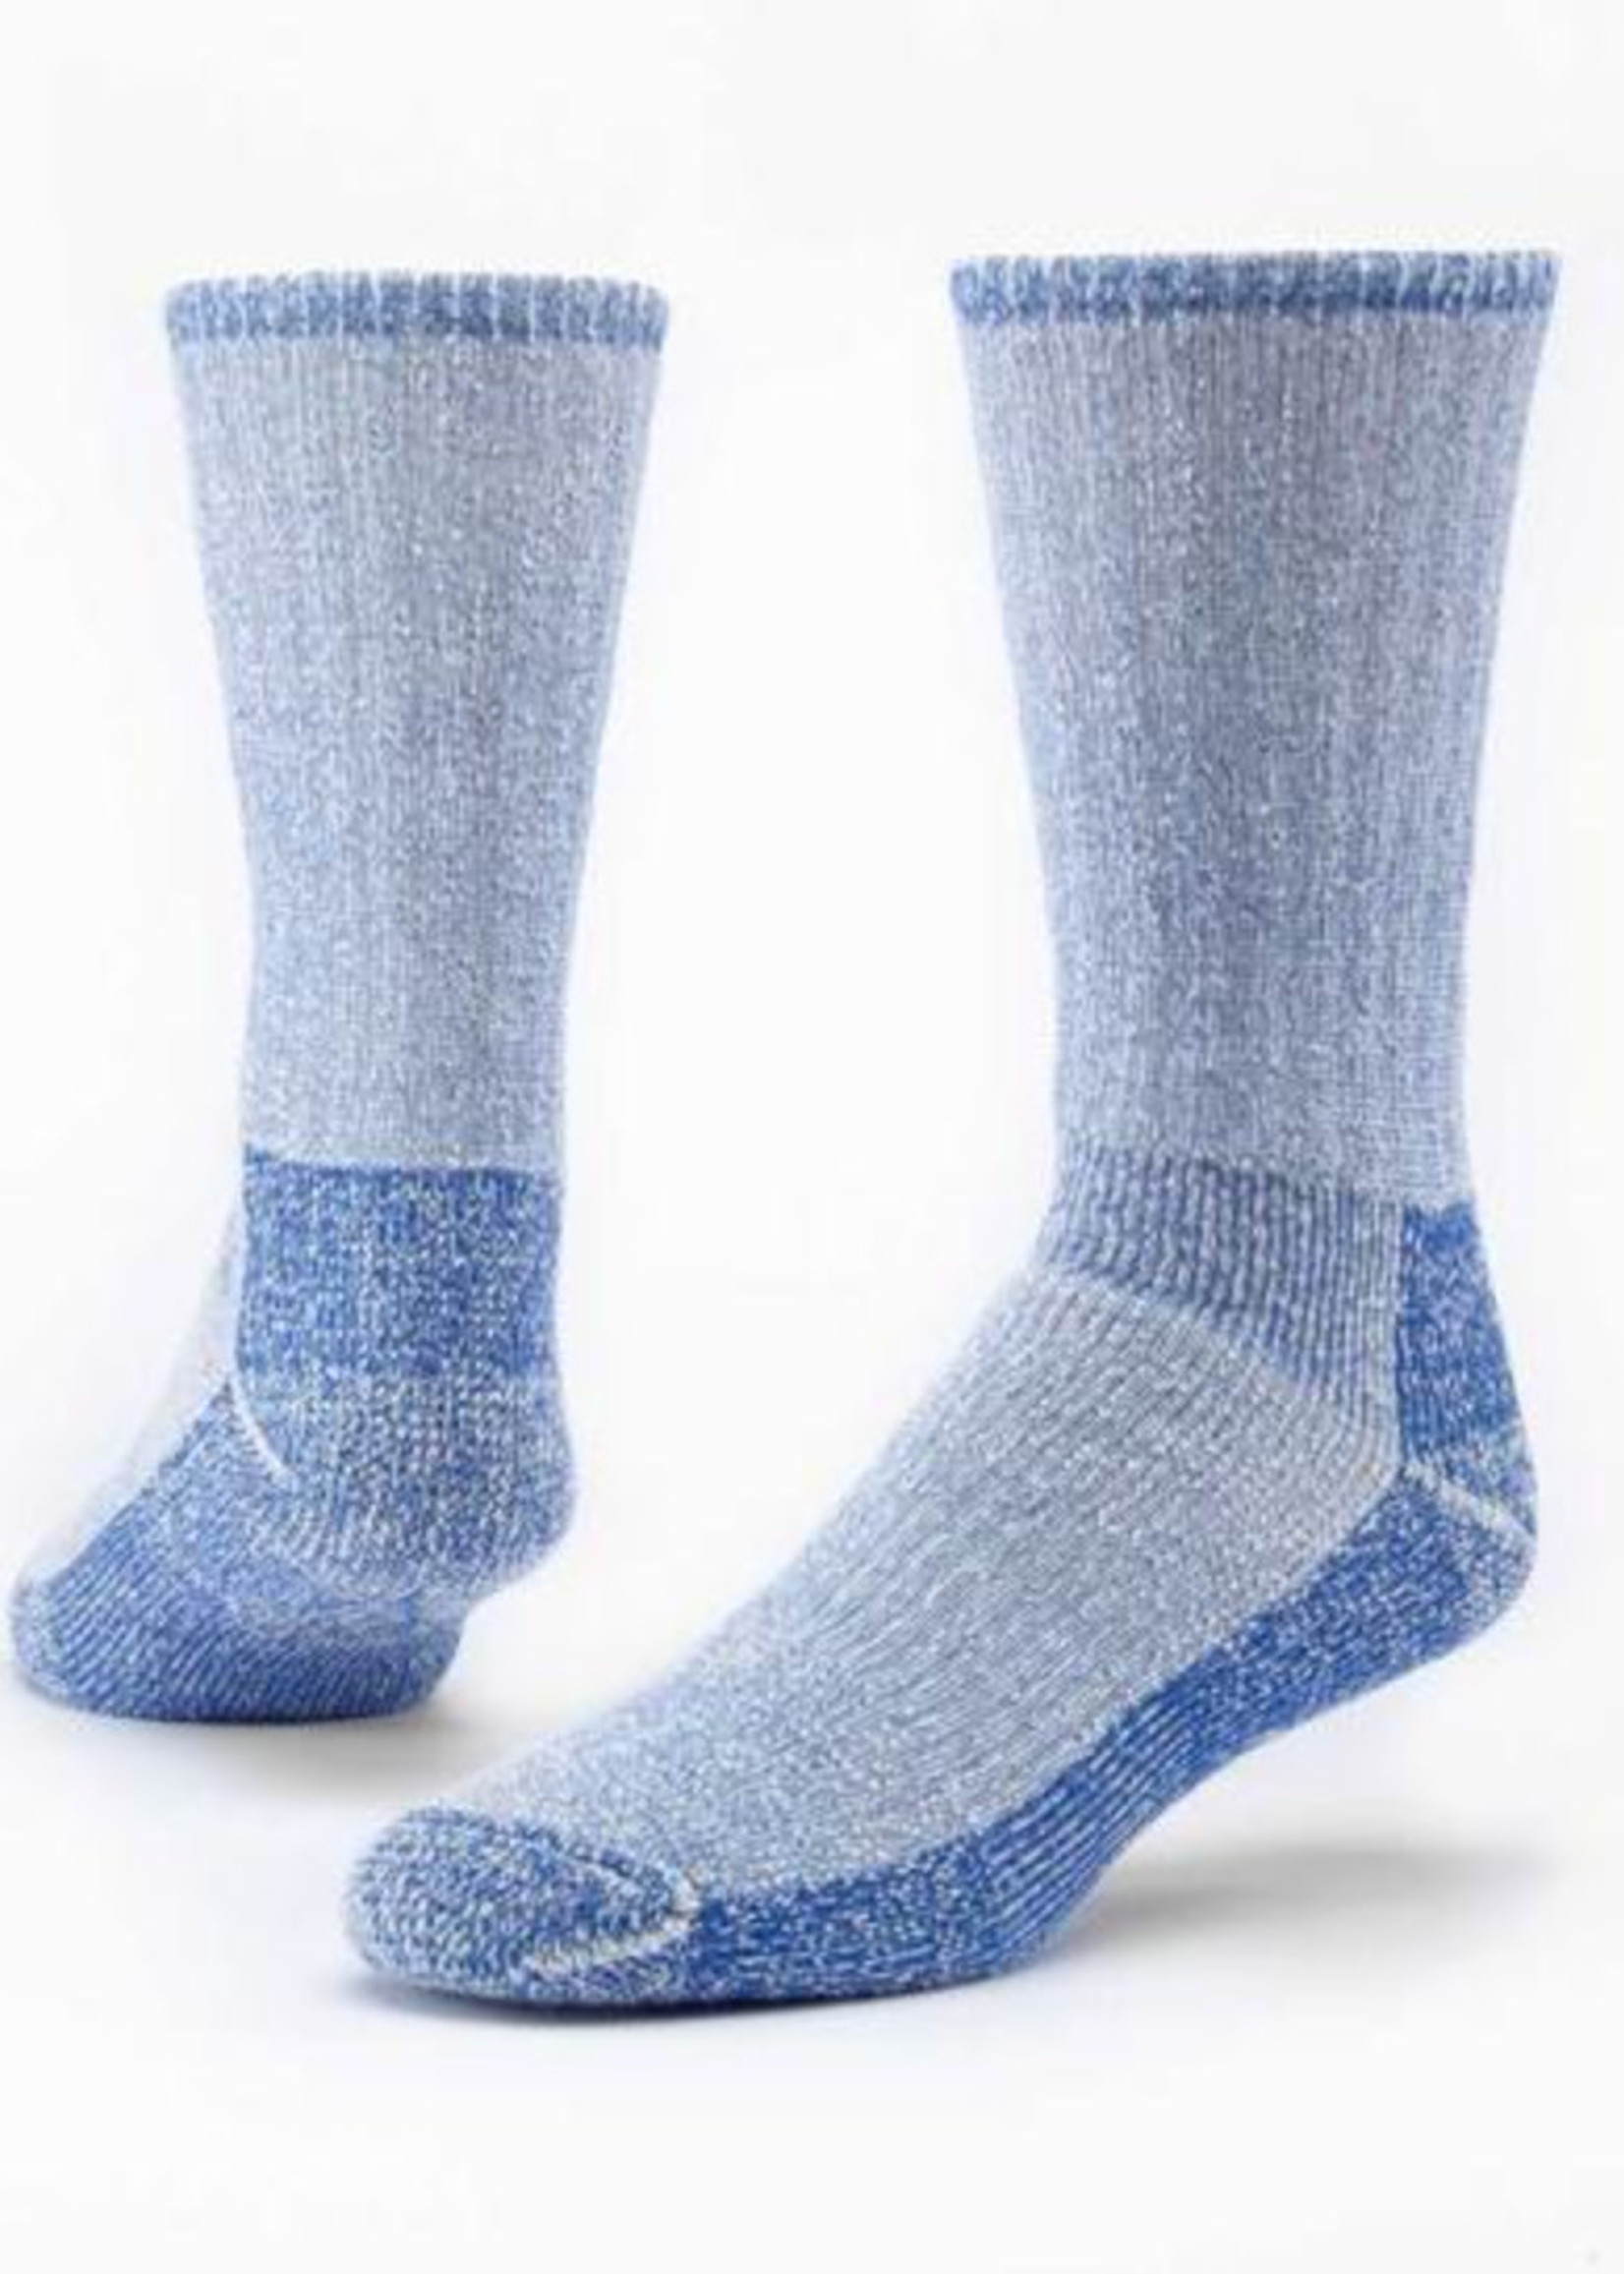 Maggies Organics Merino Wool Hiker Socks